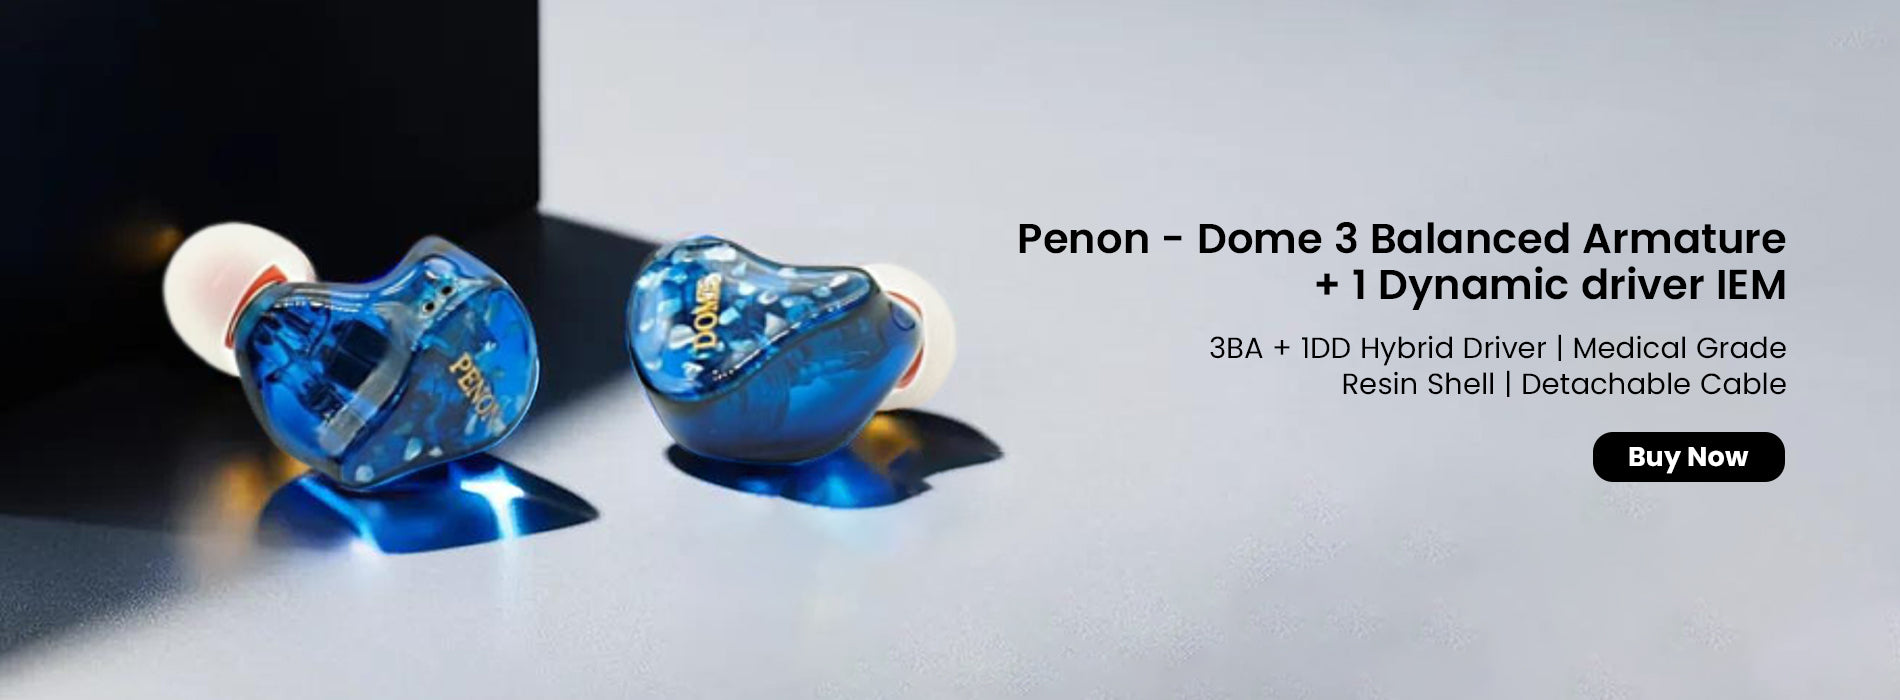 Penon - Dome 3 Balanced Armature and 1 Dynamic driver IEM